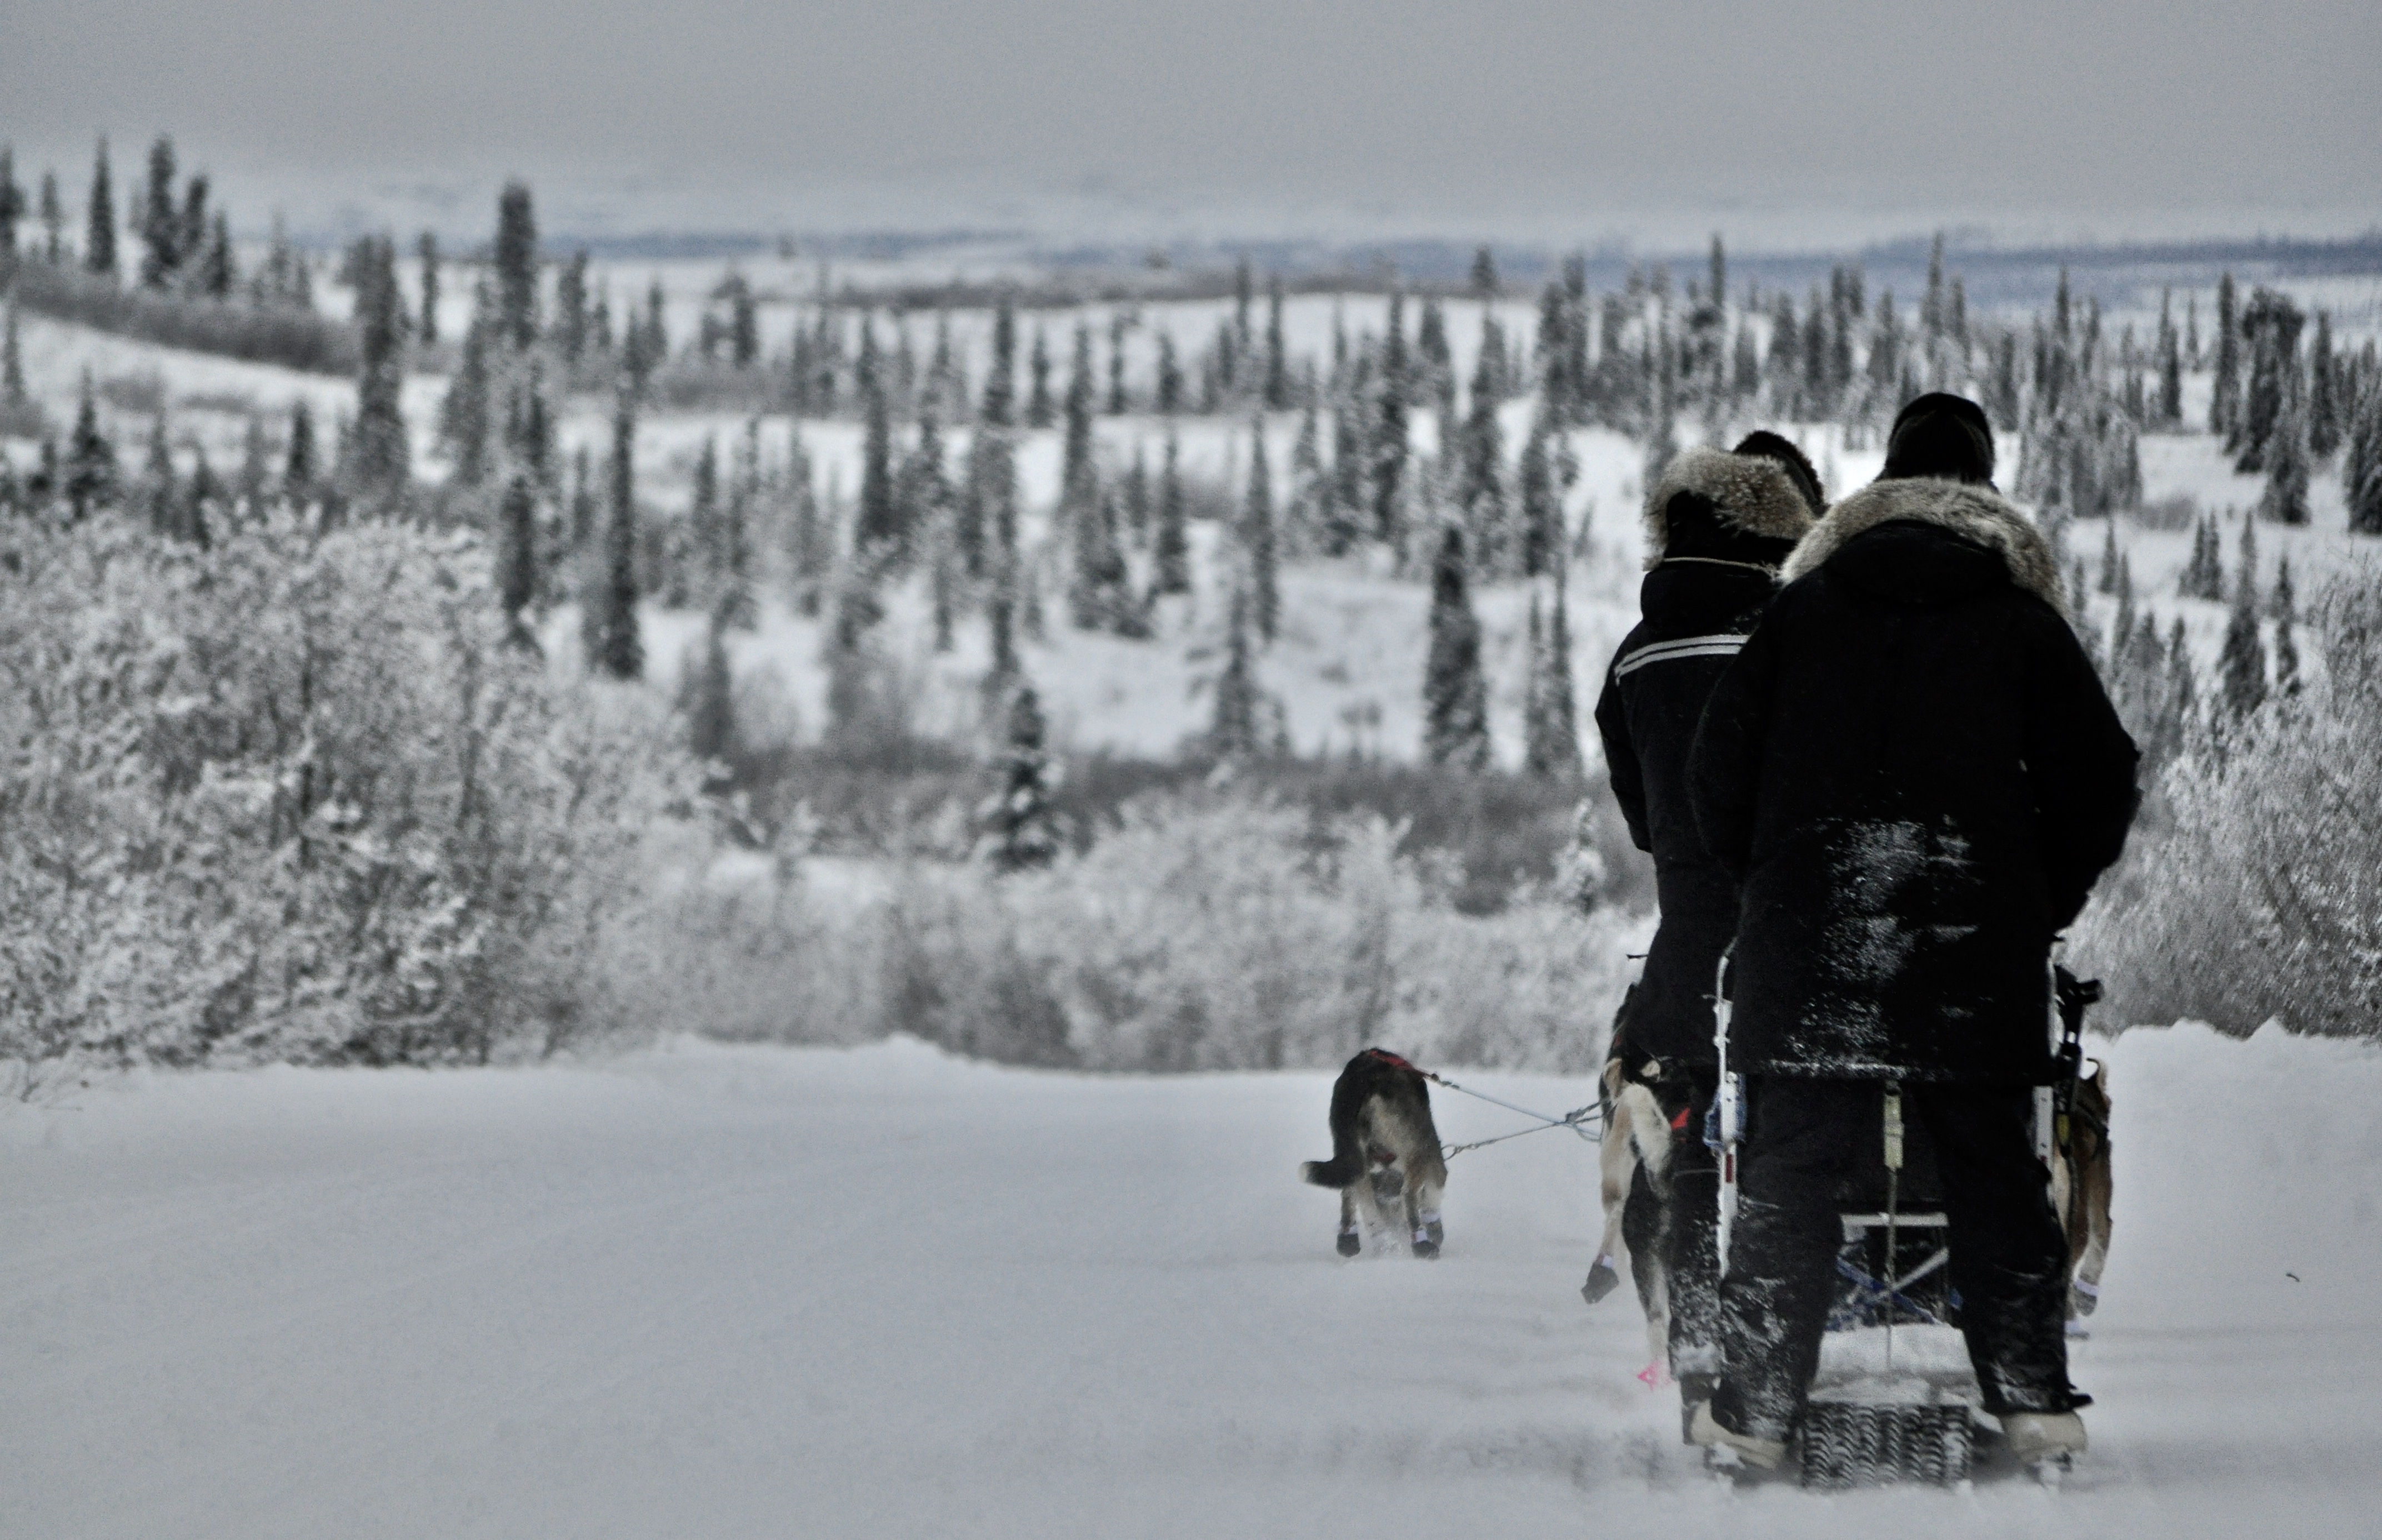 a sled dog team on a snowy road